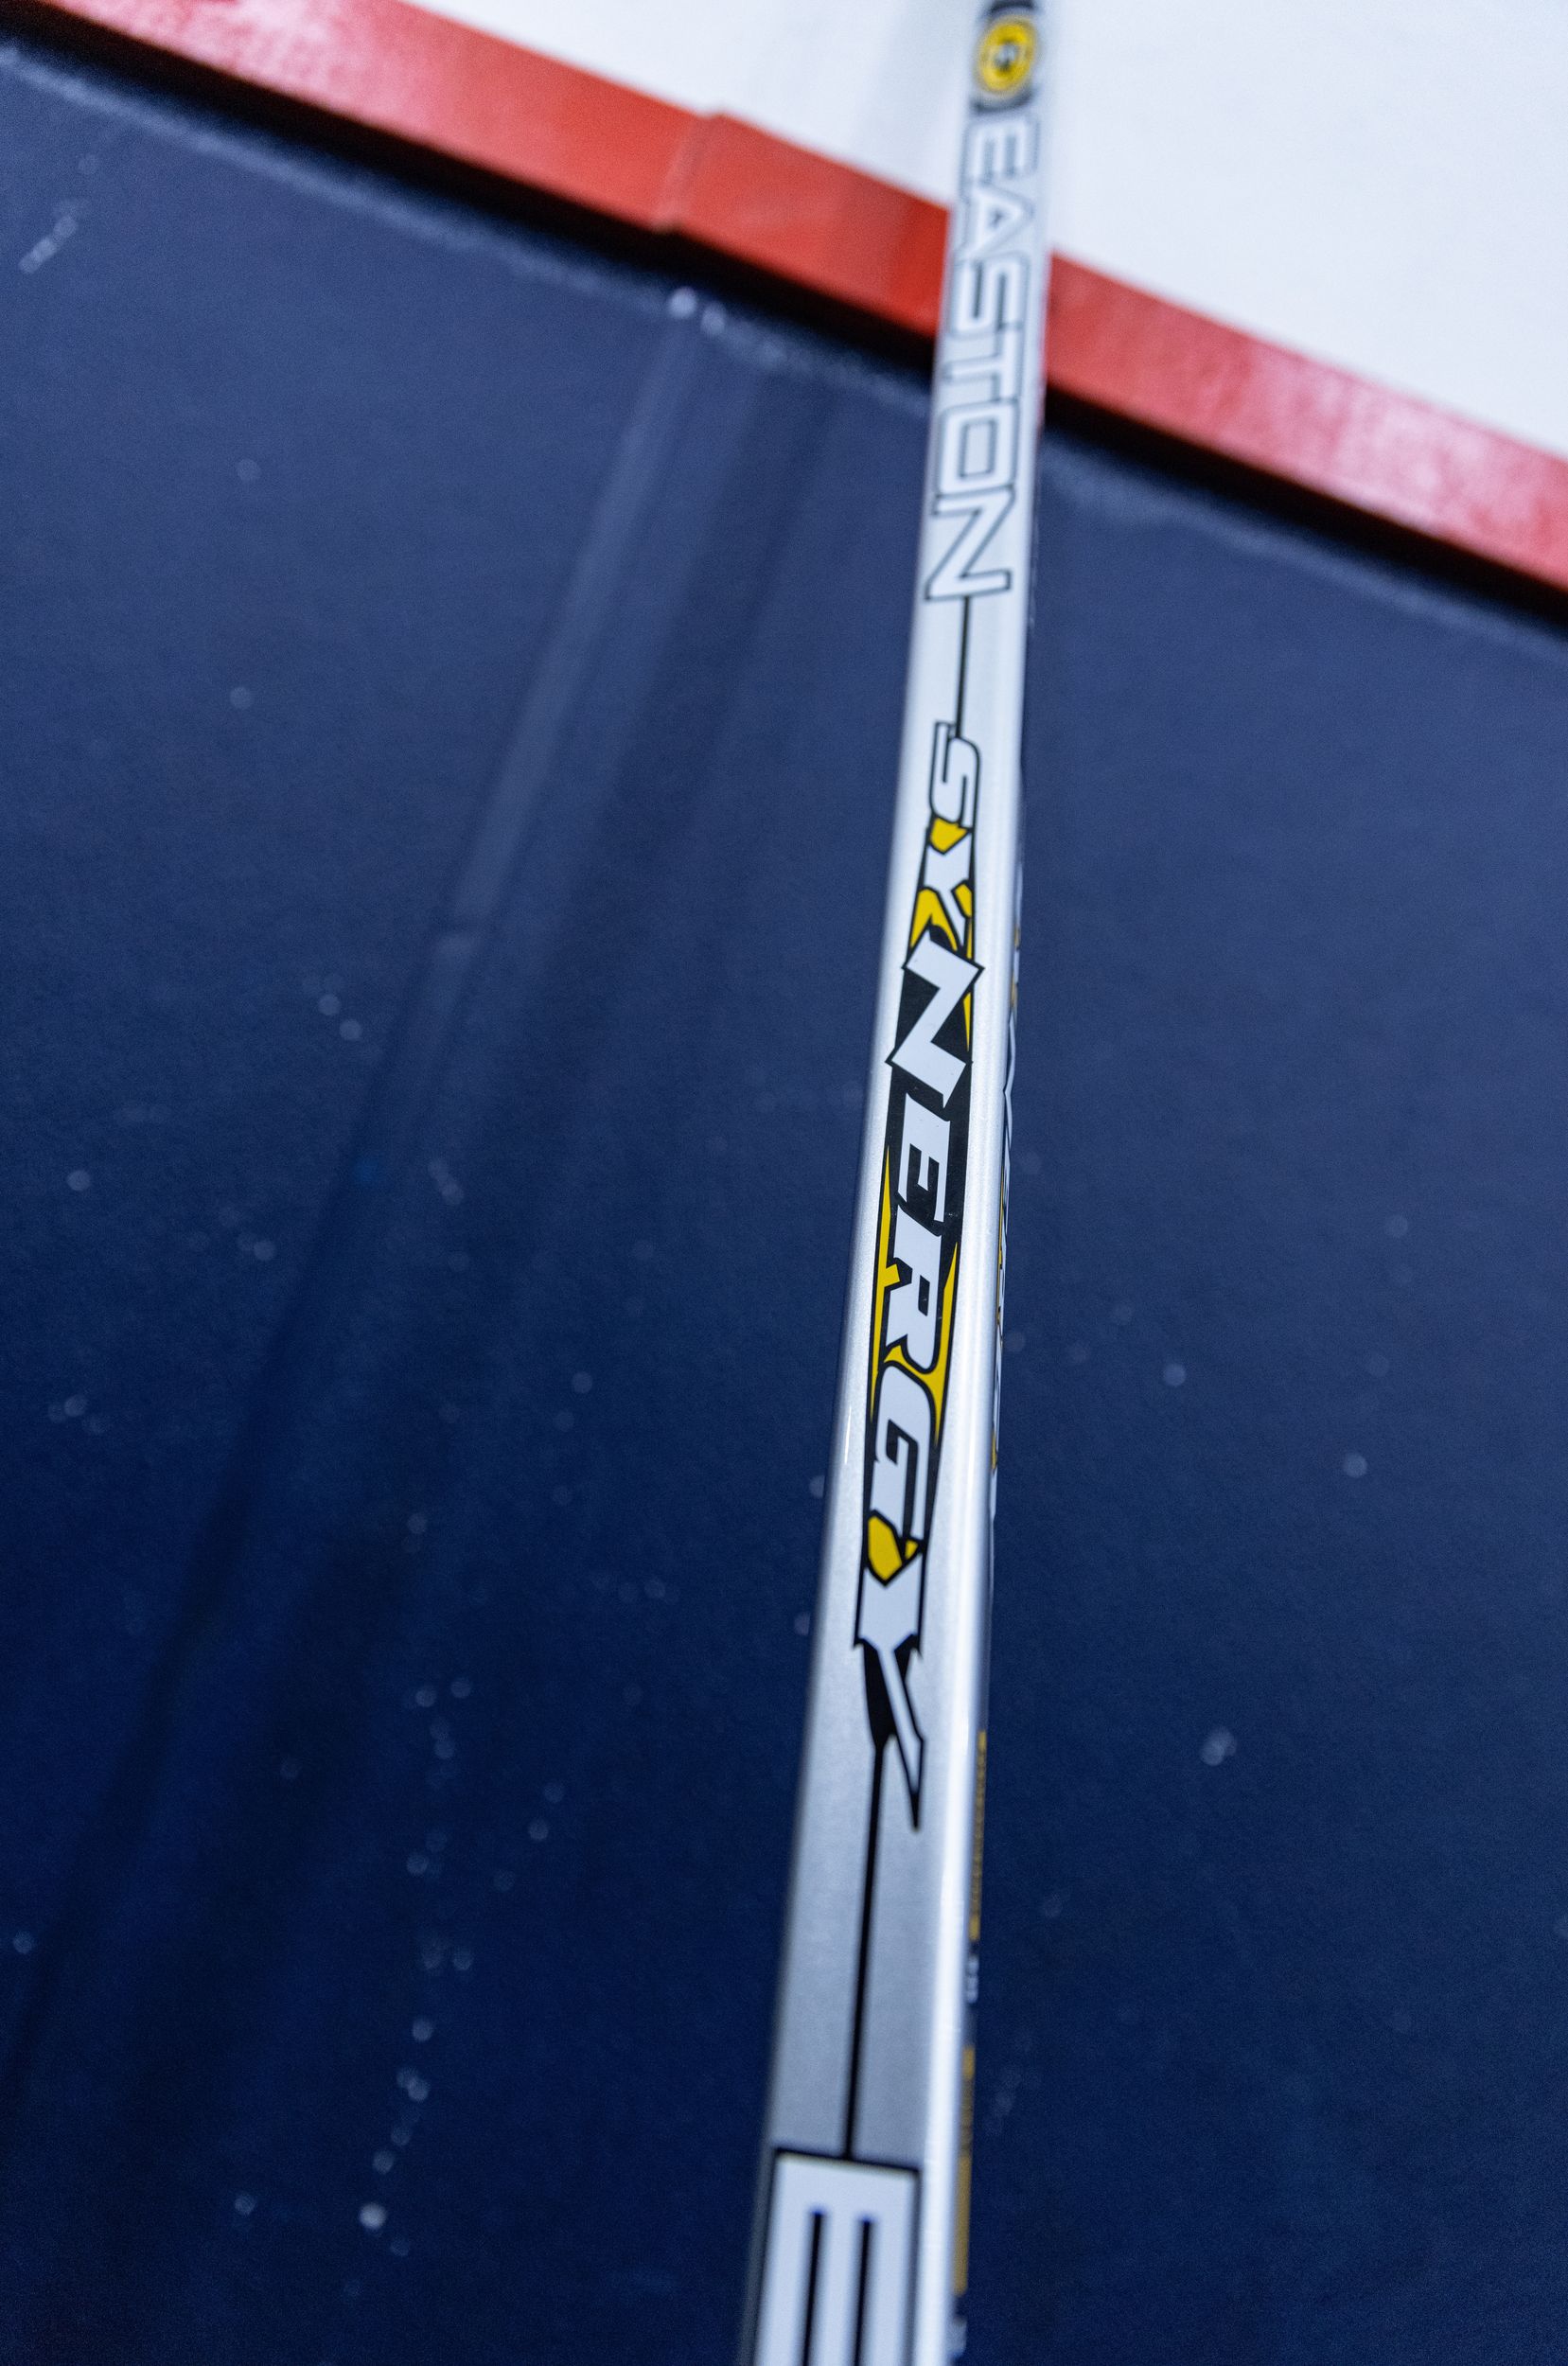 Easton Synergy Senior Hockey Stick 60'